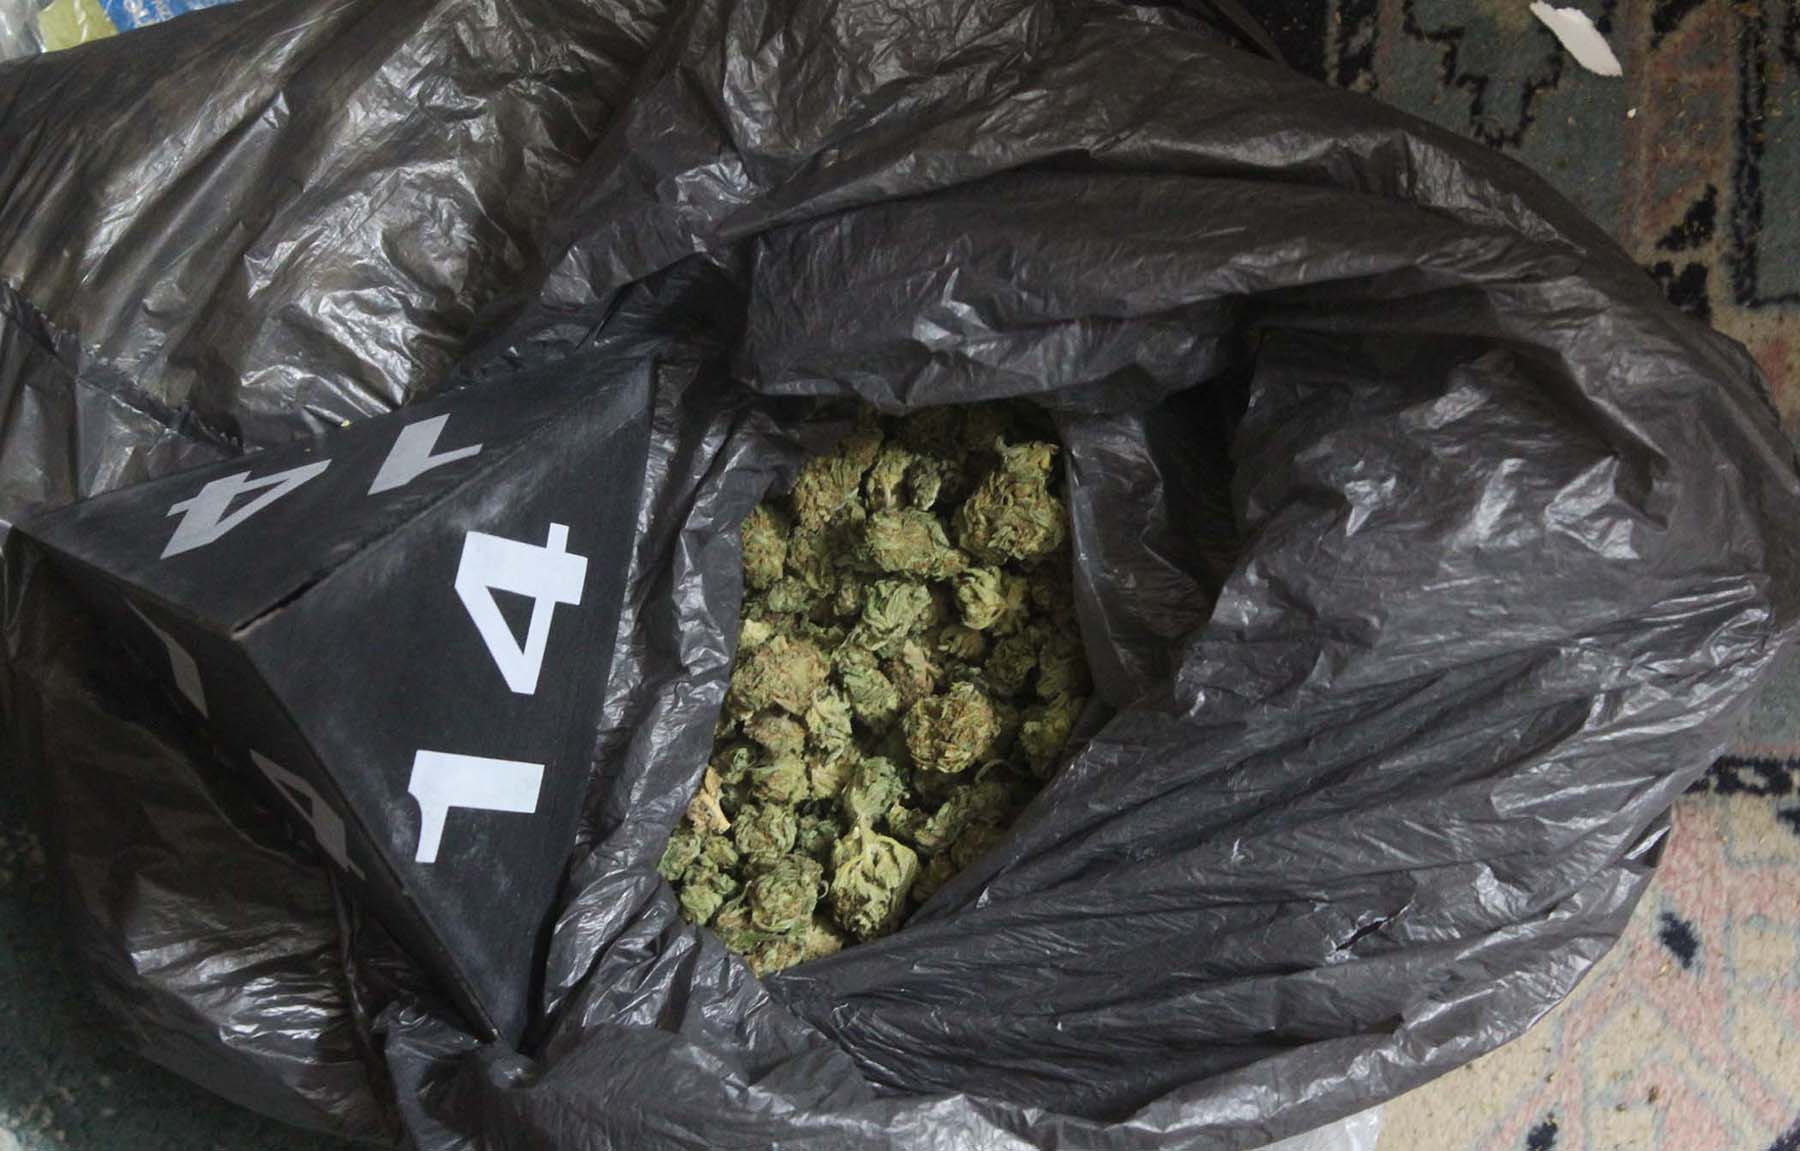 Zaplenjeno oko šest kilograma različitih vrsta narkotika i uhapšeno 12 osoba